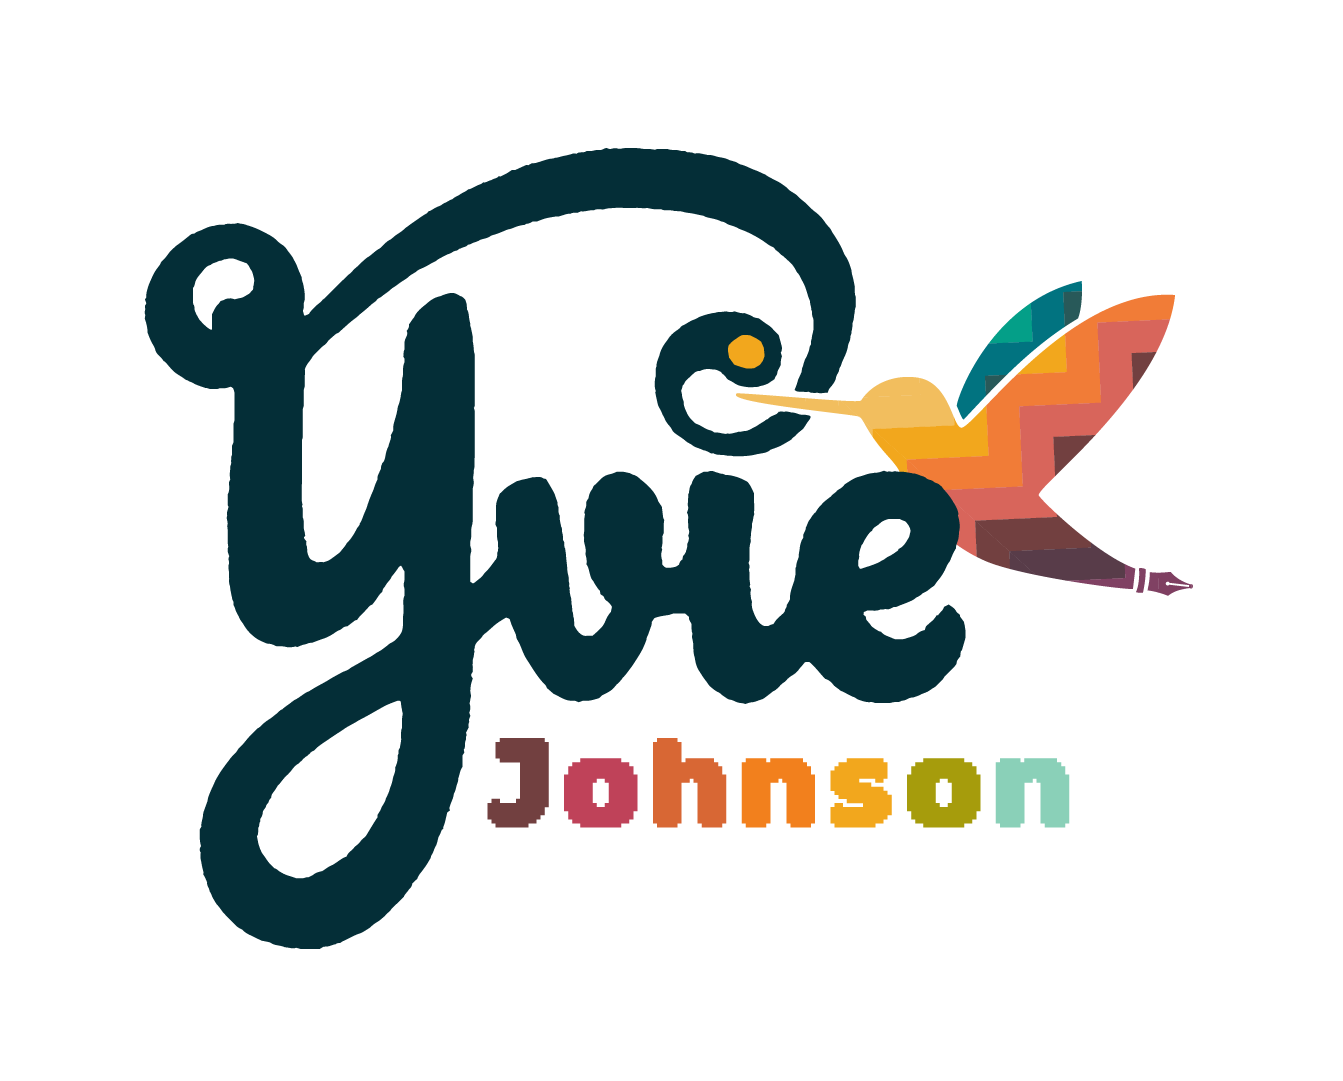 Yvie Johnson